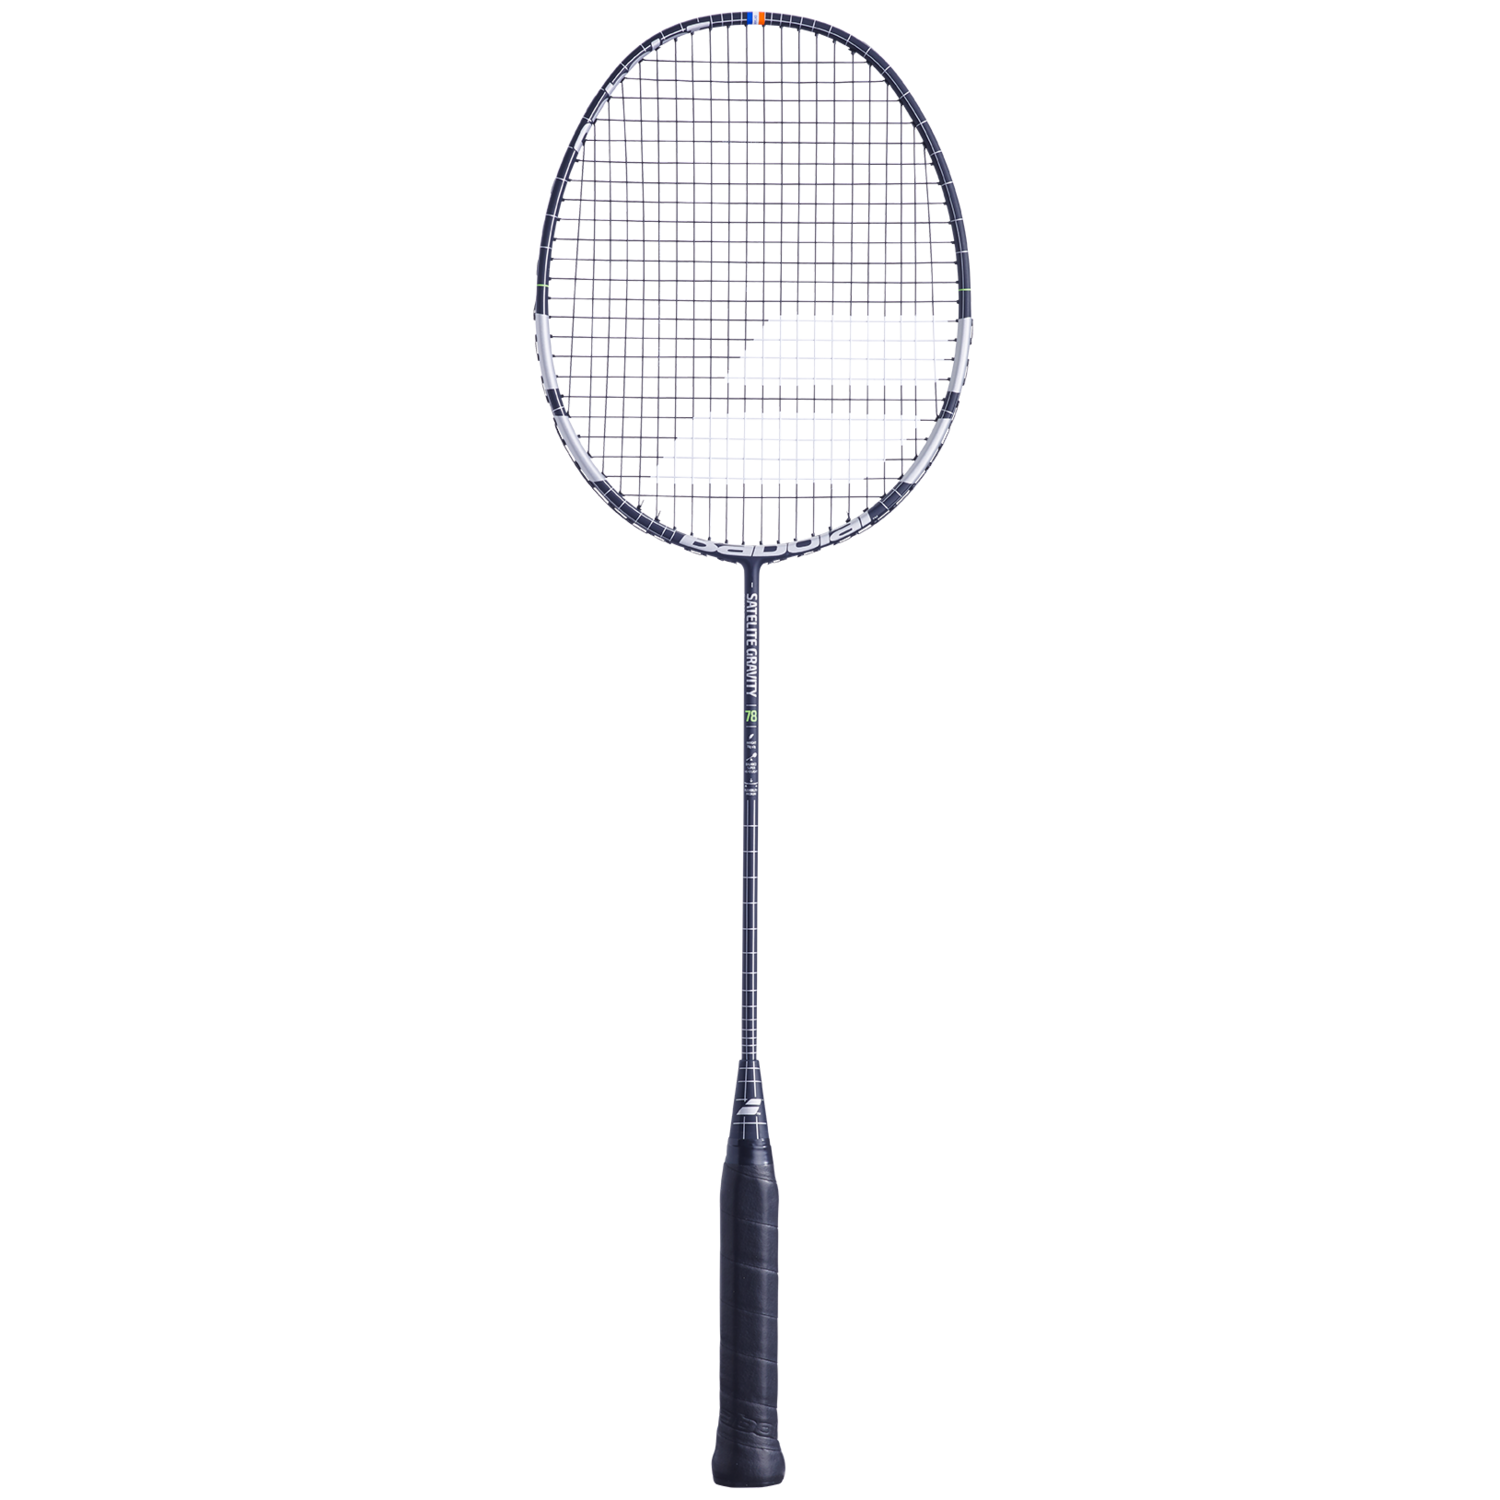 Babolat Satelite Gravity 78 Badminton Racket Limited Edition